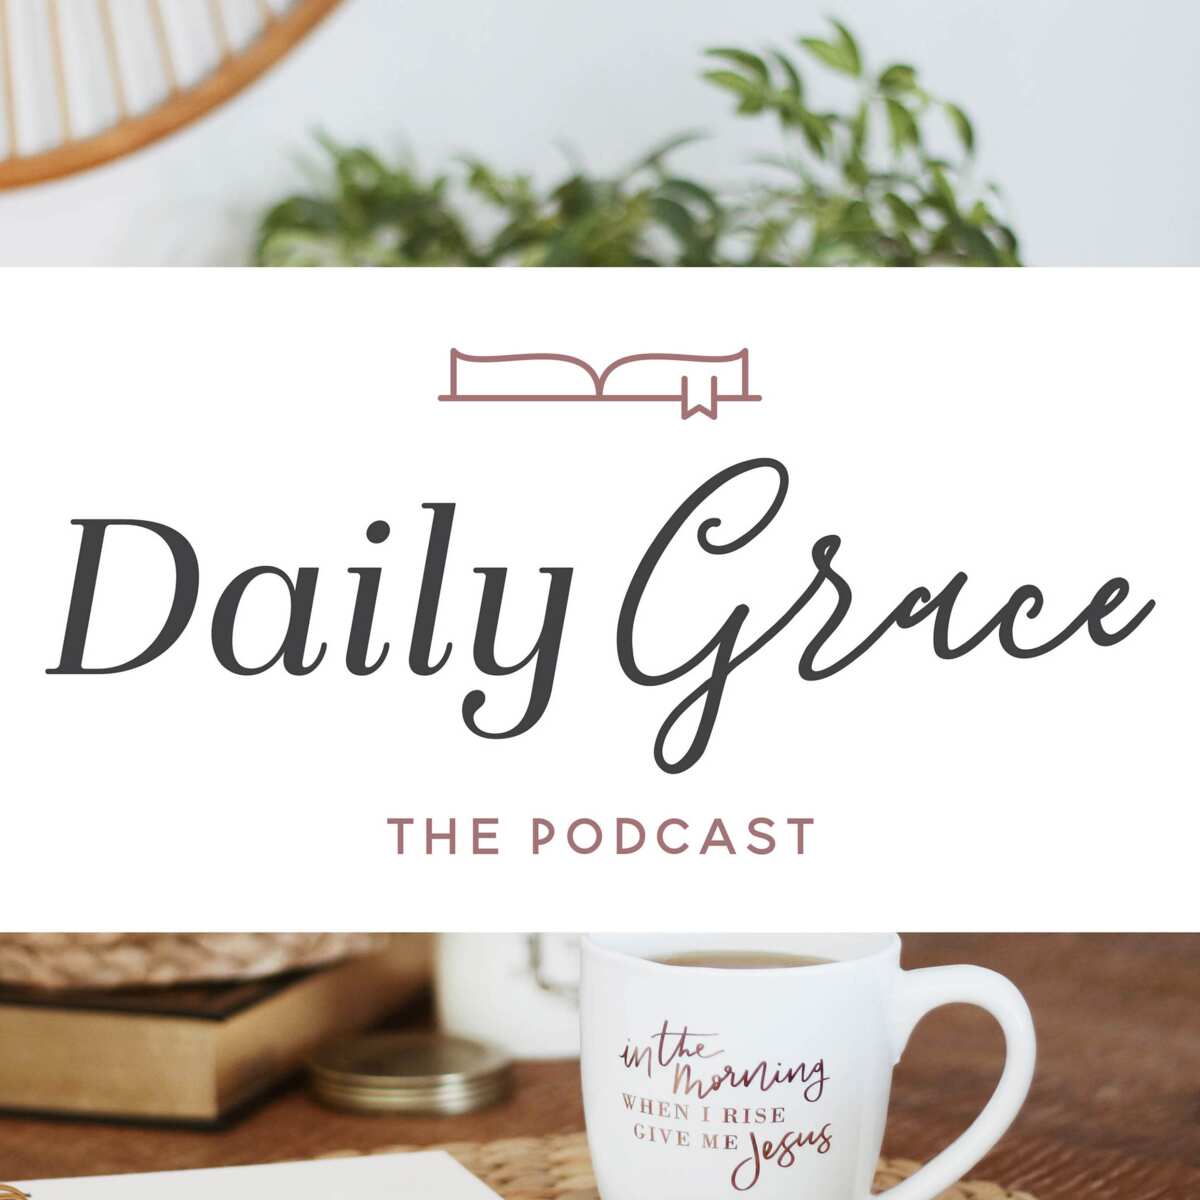 christian podcast on singleness